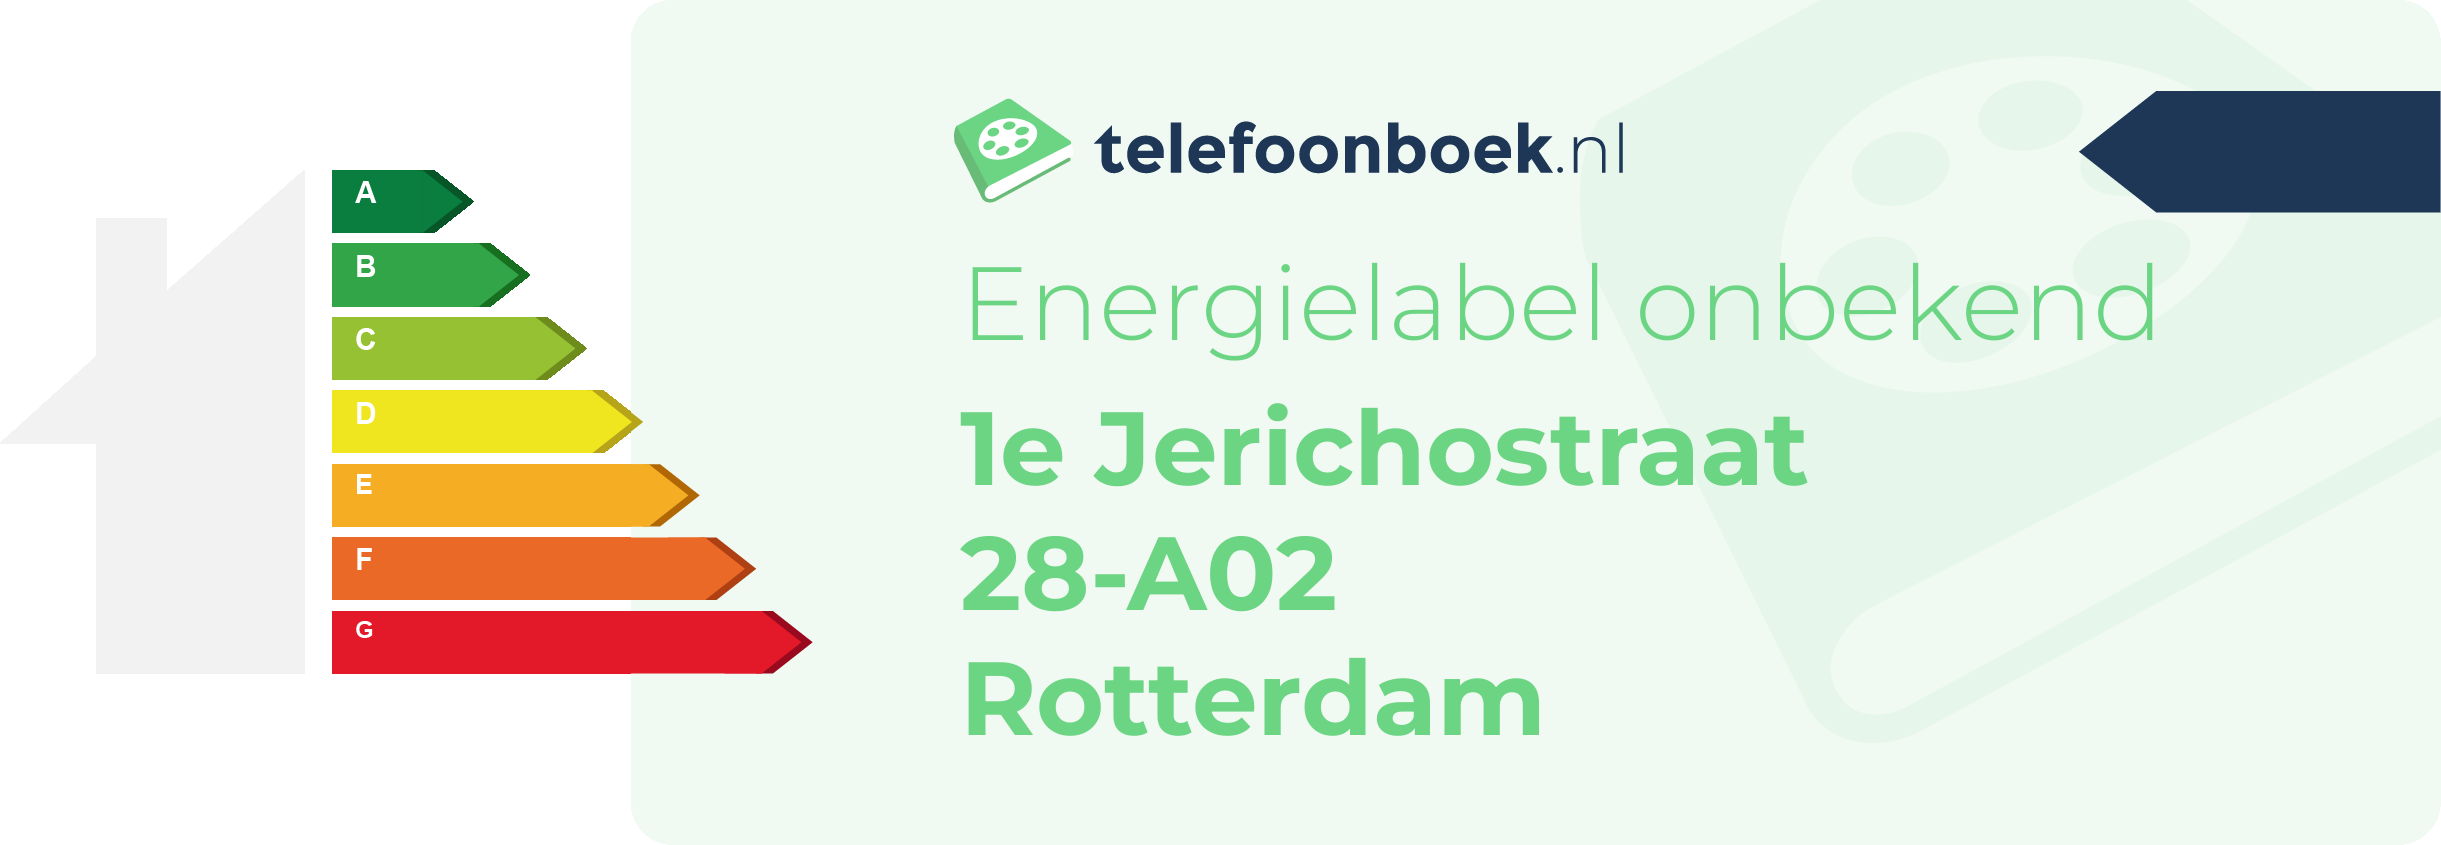 Energielabel 1e Jerichostraat 28-A02 Rotterdam